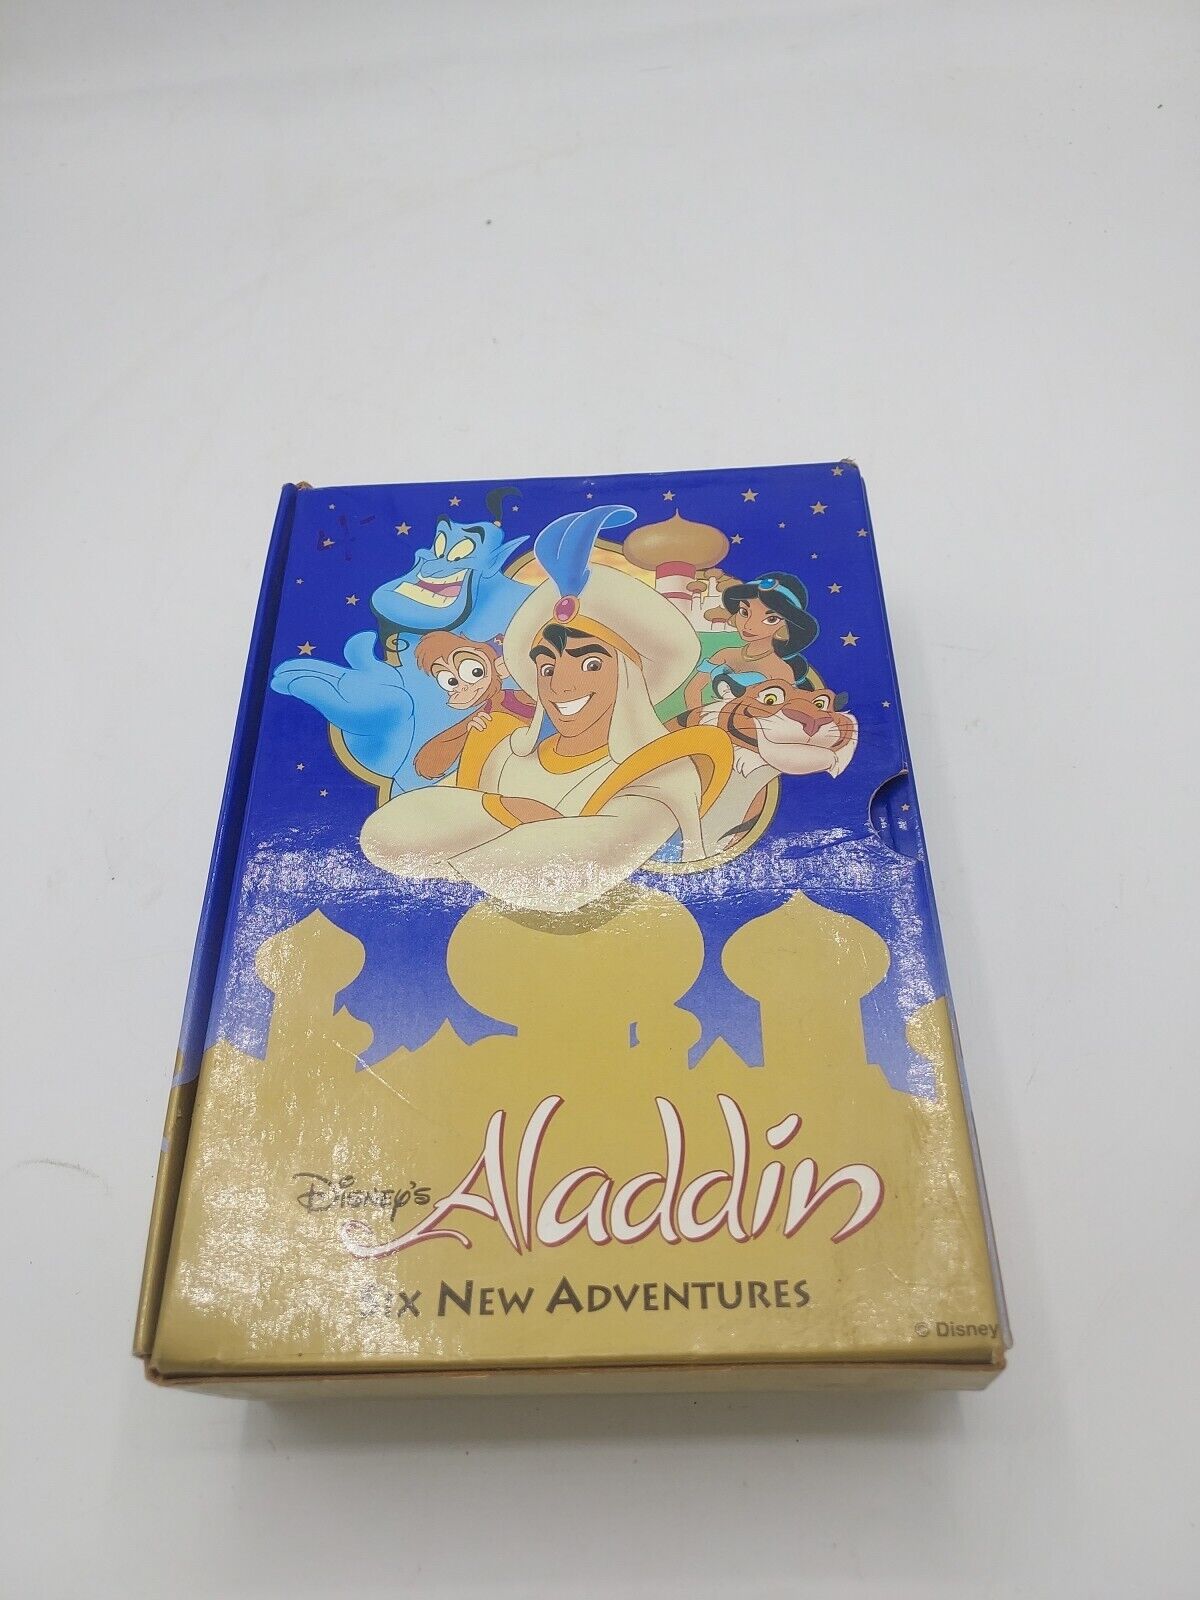 Vintage Disney\'s Aladdin Six New Adventures Book Set 1993 Hardcover Disney Books